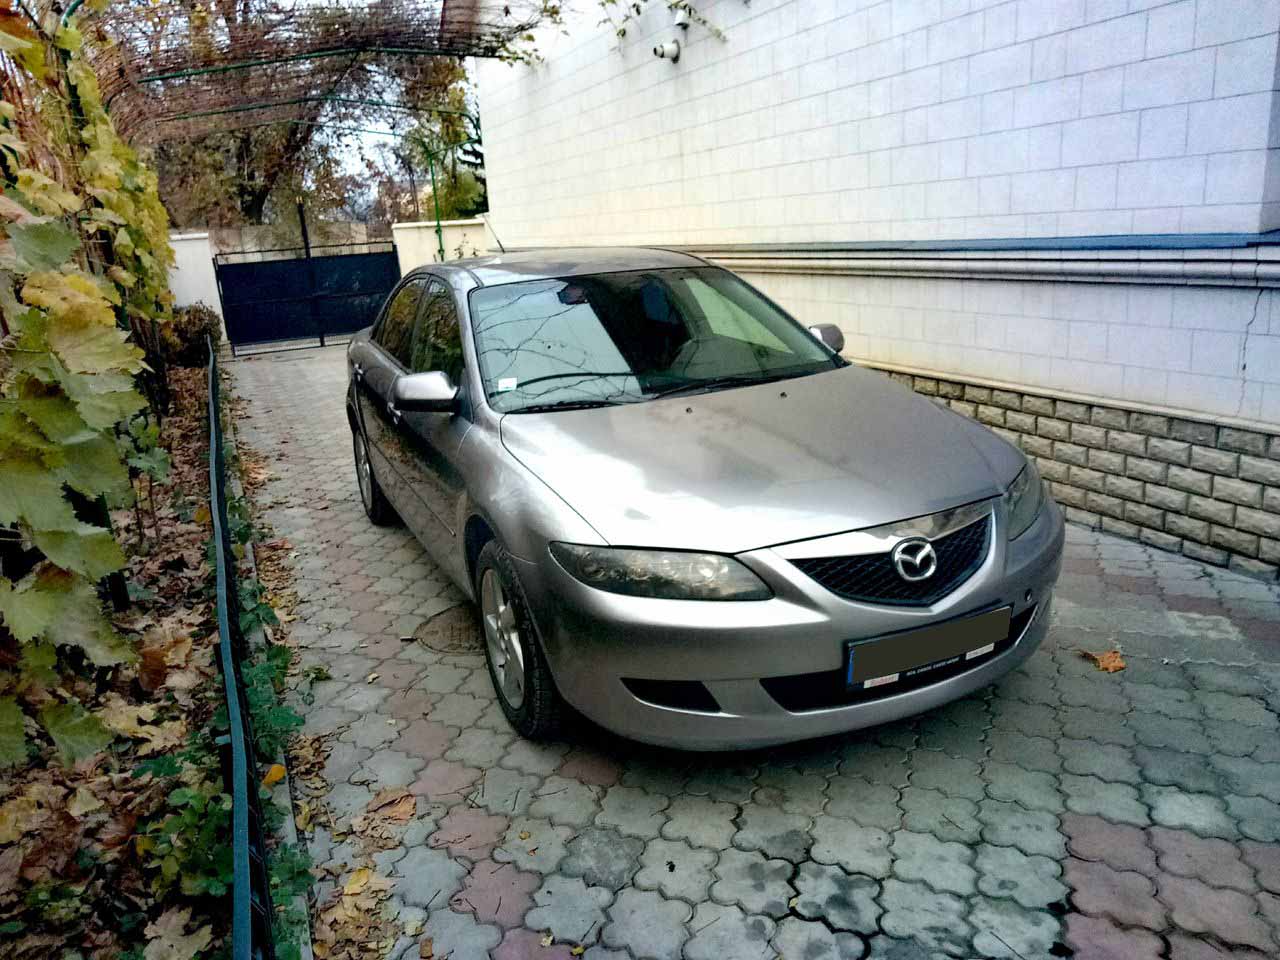 
Rent a Car Chisinau Moldova - Mazda 6
